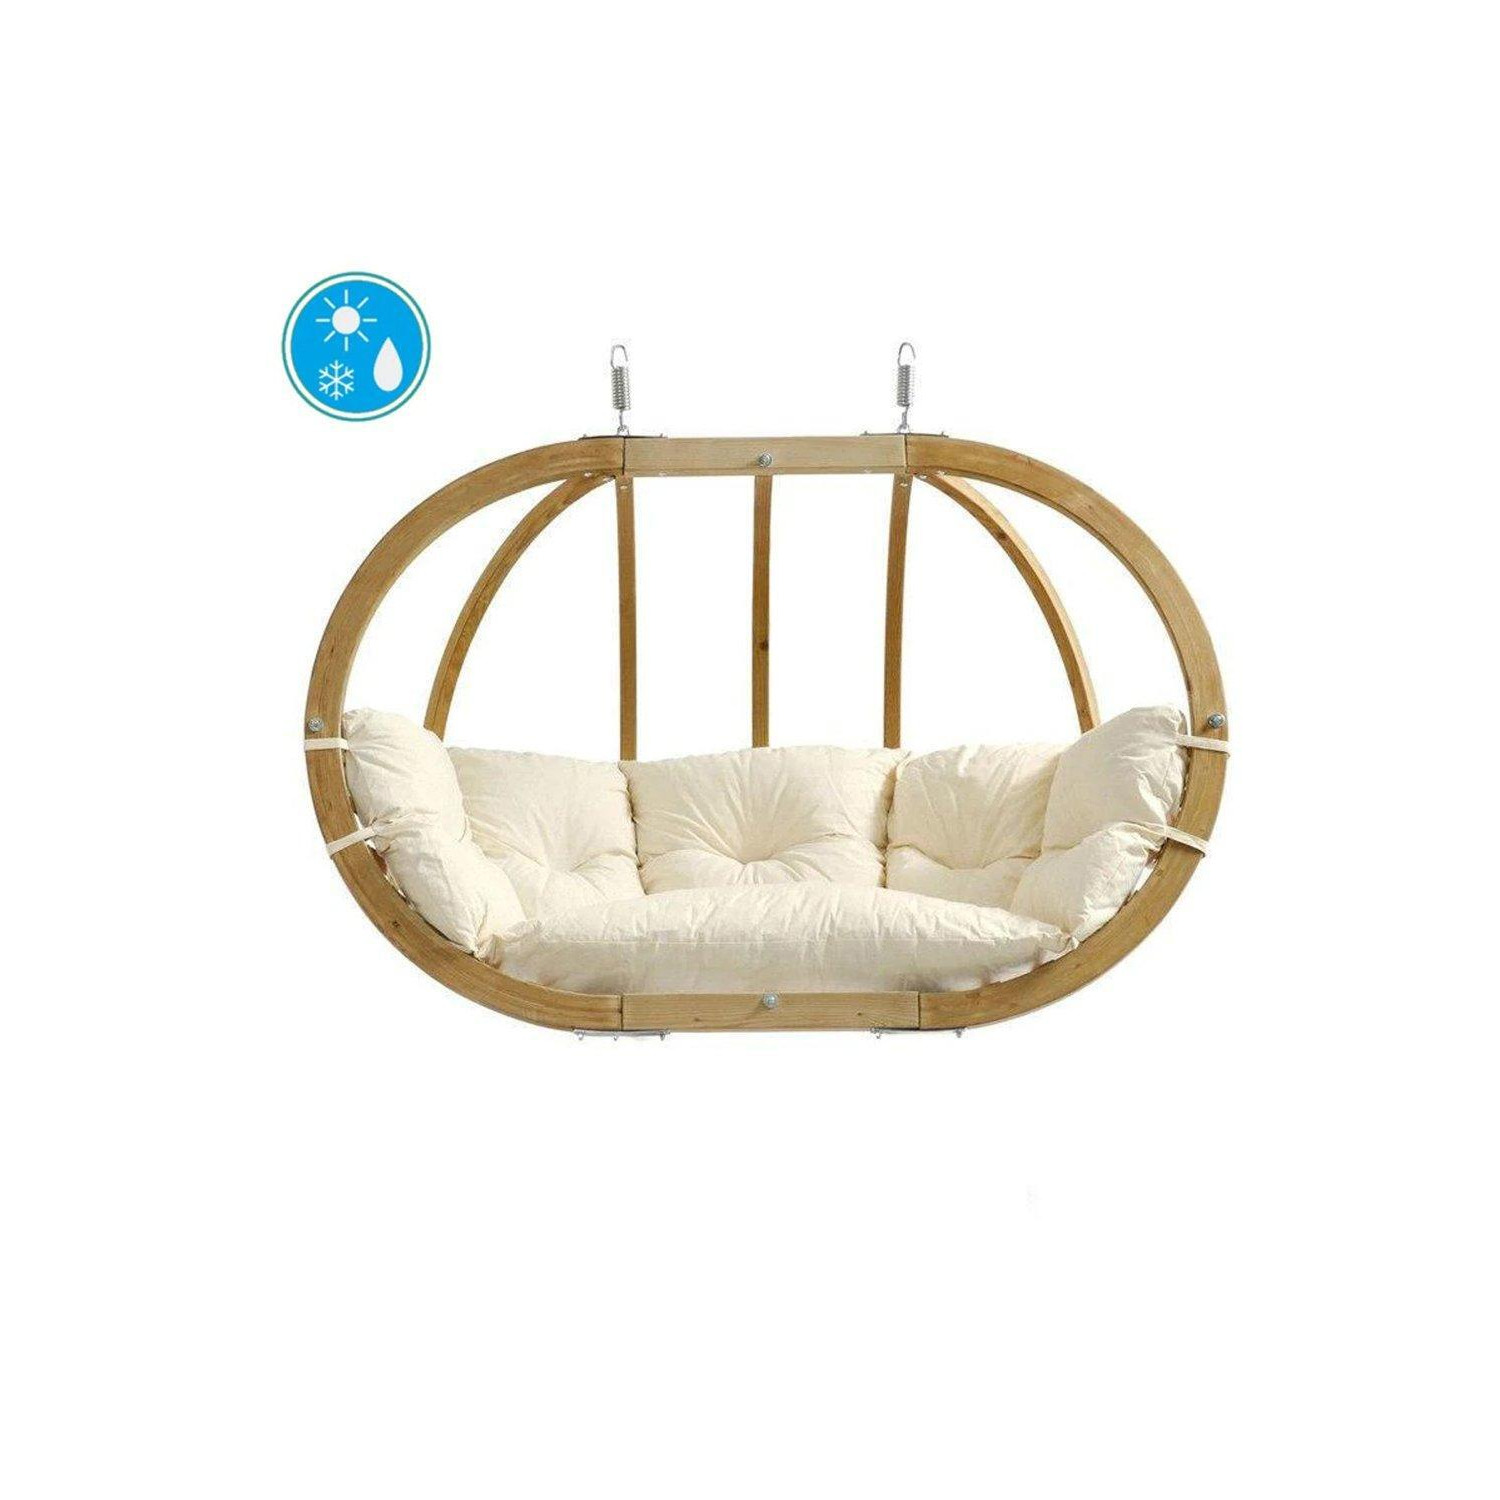 Globo Double Royal Wooden Cushion Egg Hanging Chair - Natura - image 1